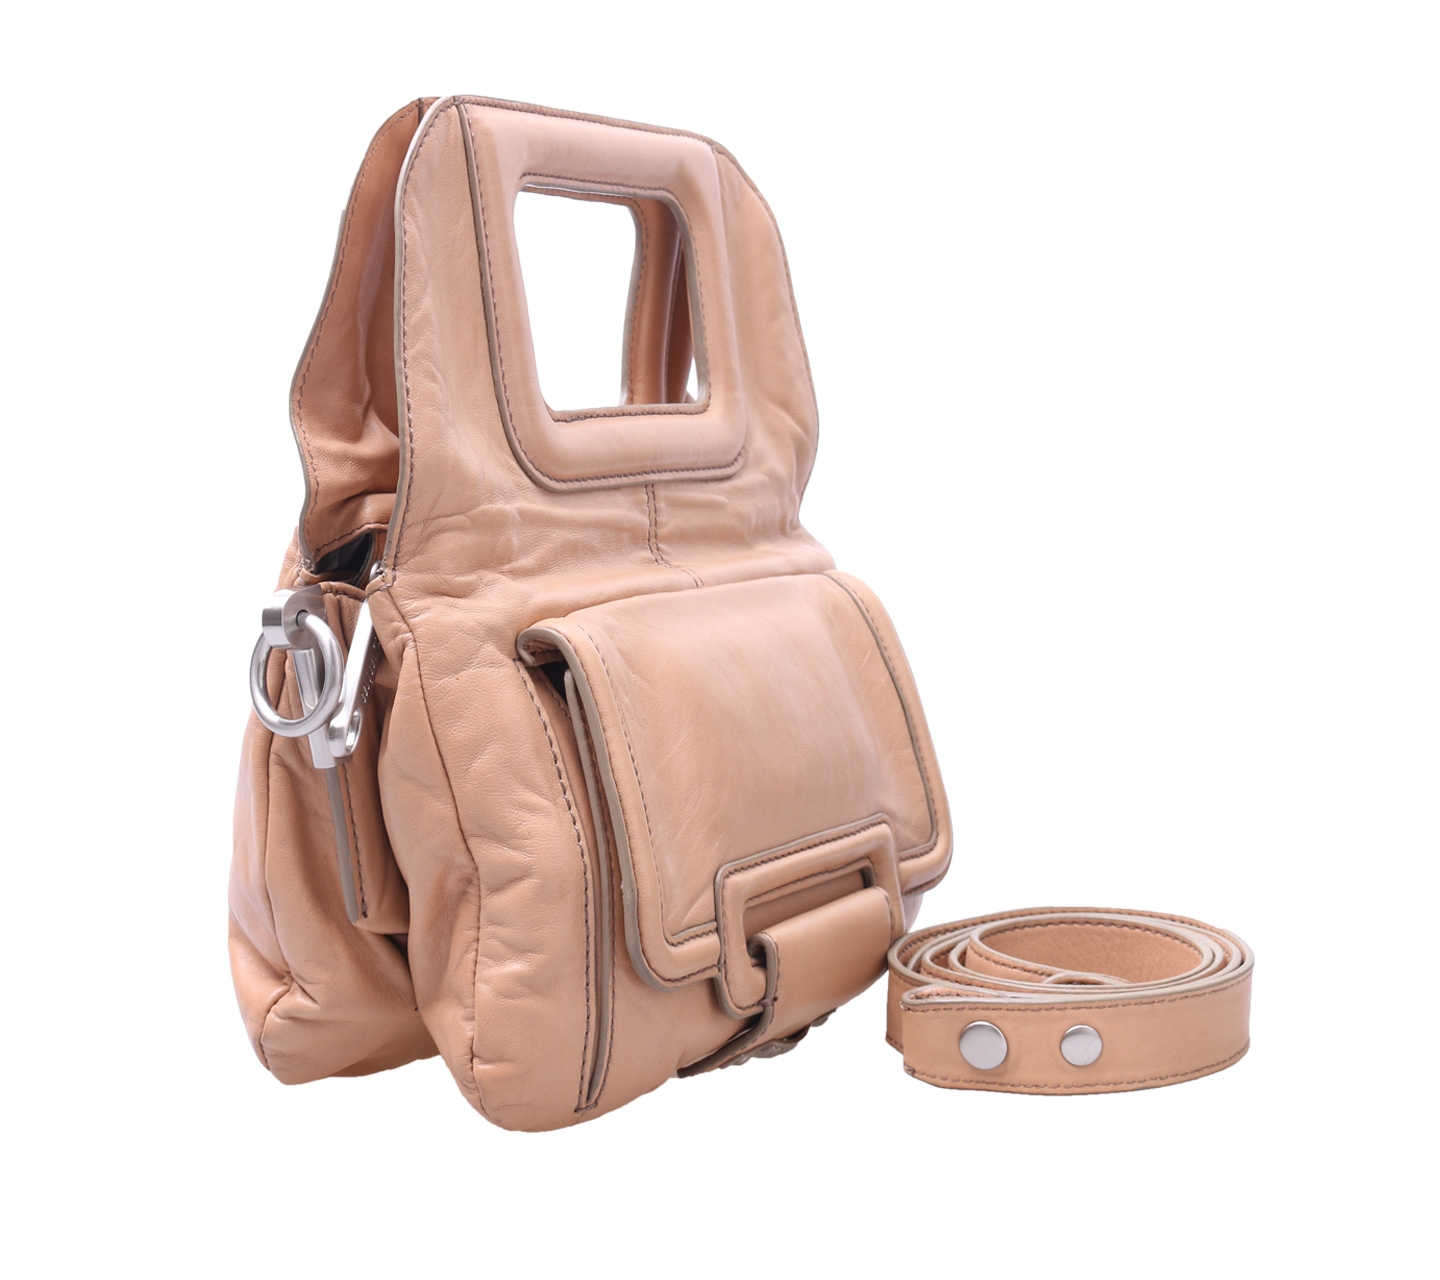 Mimco light brown satchel